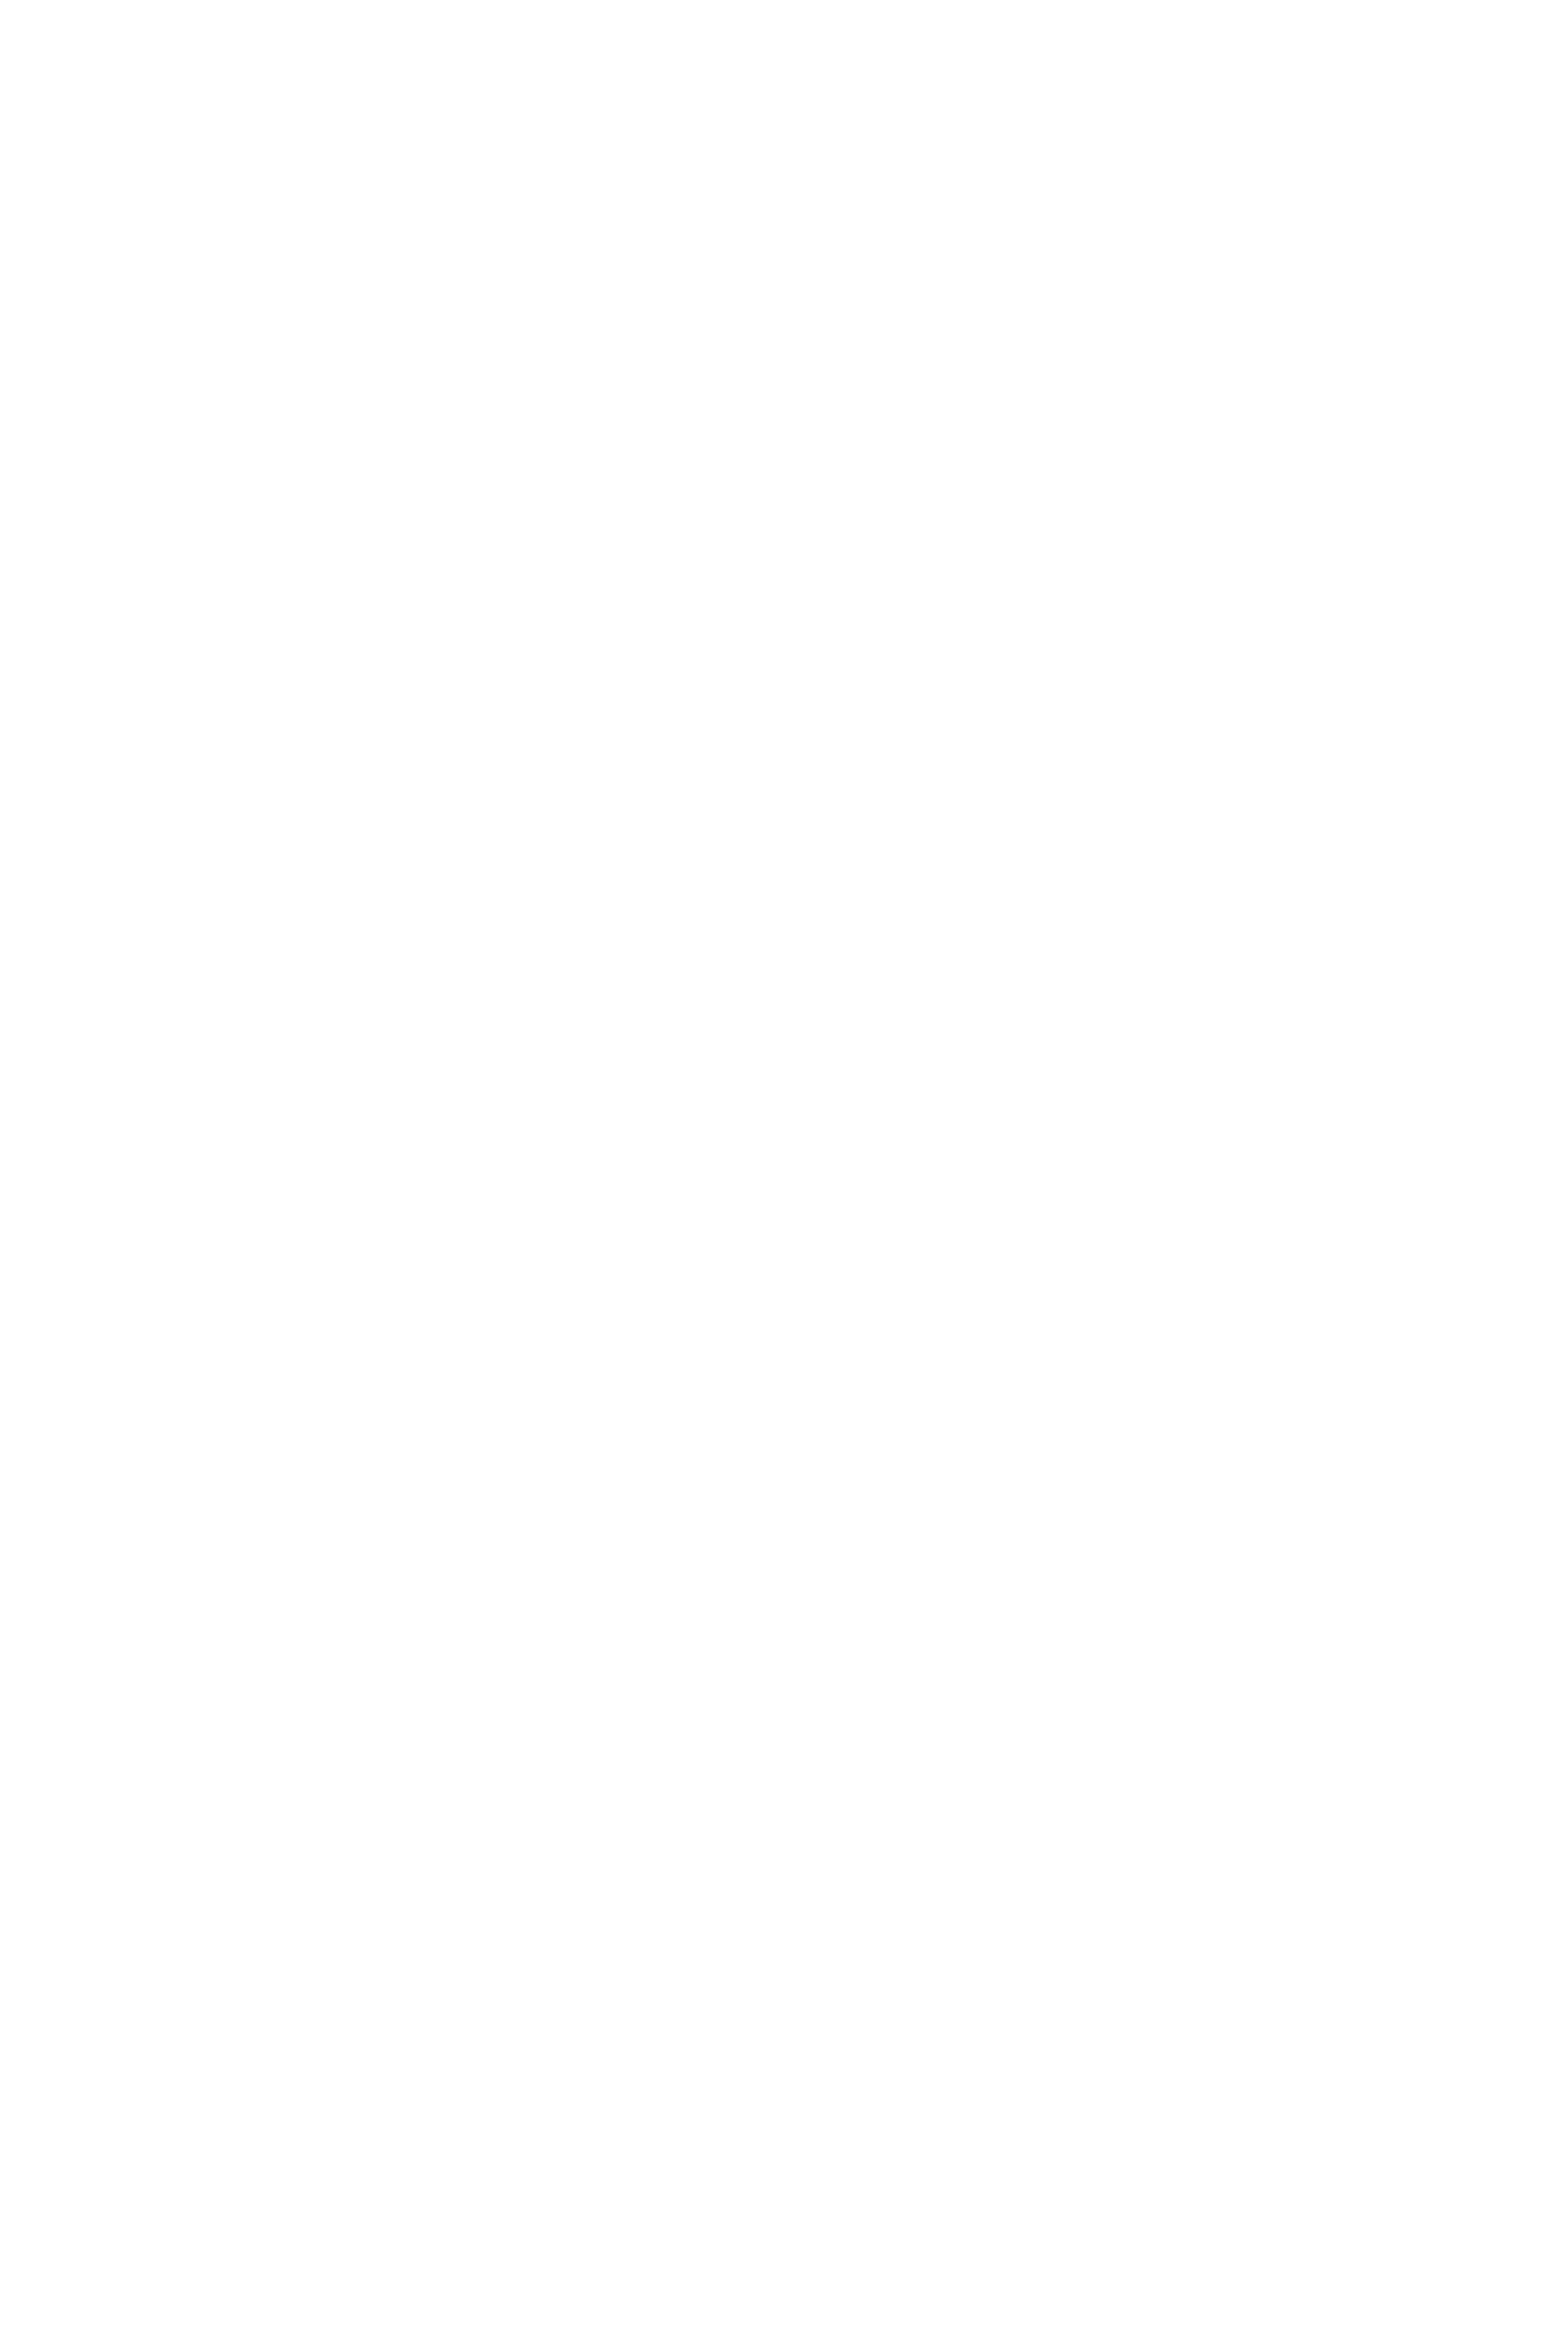 Balor Club (Bullet Club White) Logo by DarkVoidPictures on DeviantArt